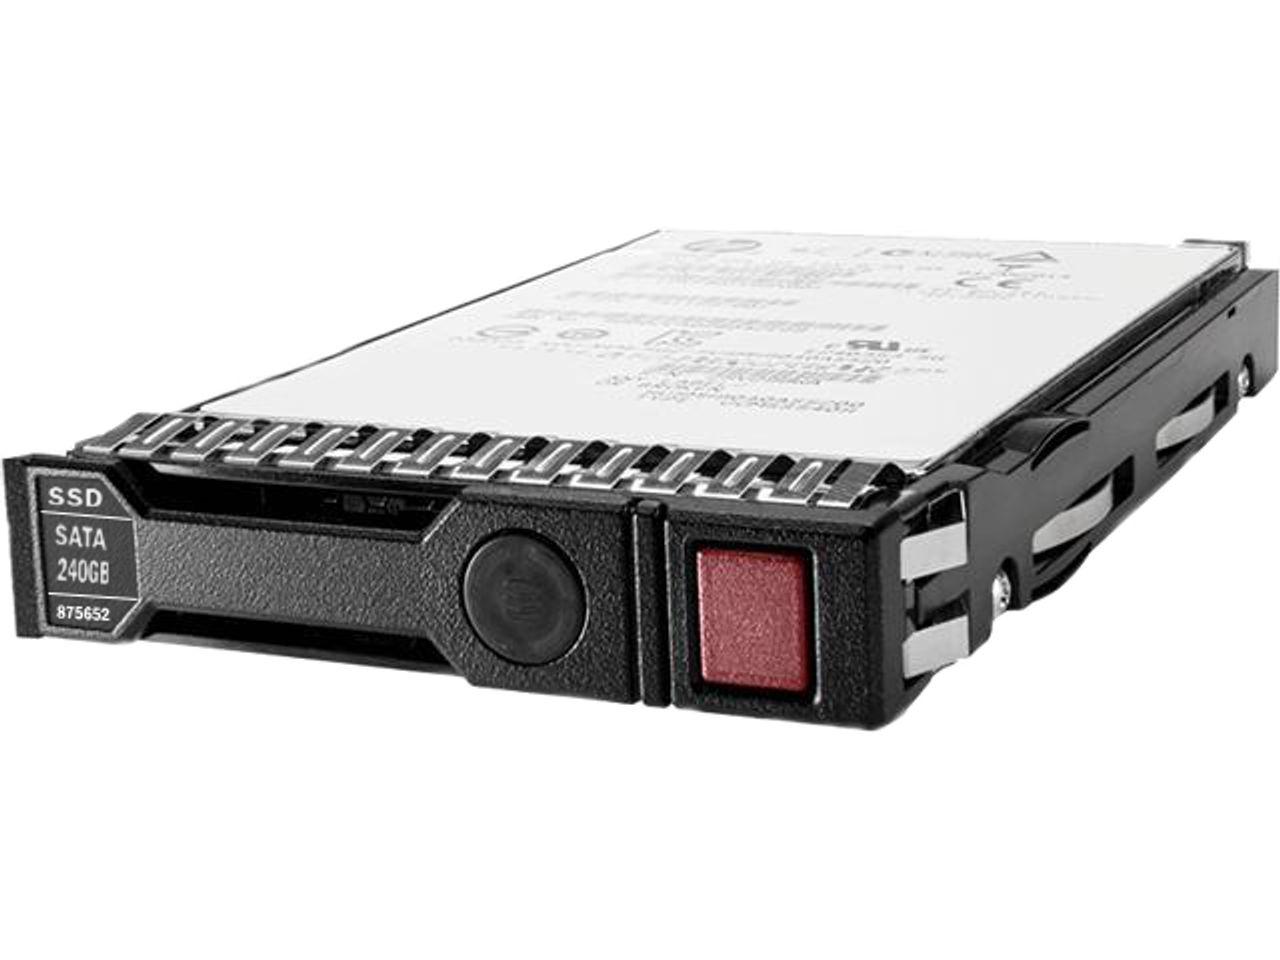 2.5 inch SATA SSD Series, 2.5 inch SSD